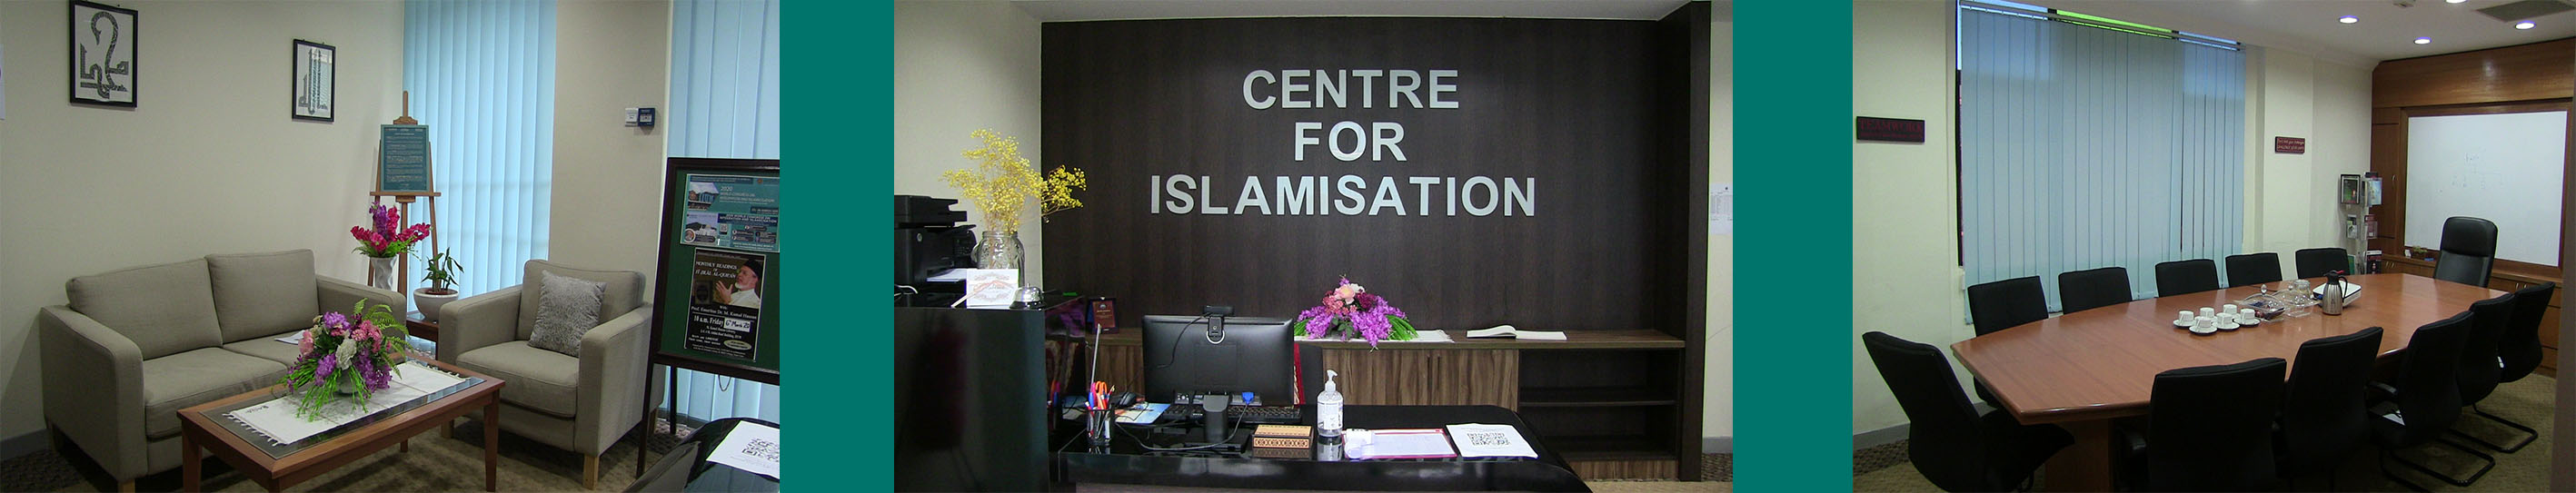 CENTRE FOR ISLAMISATION